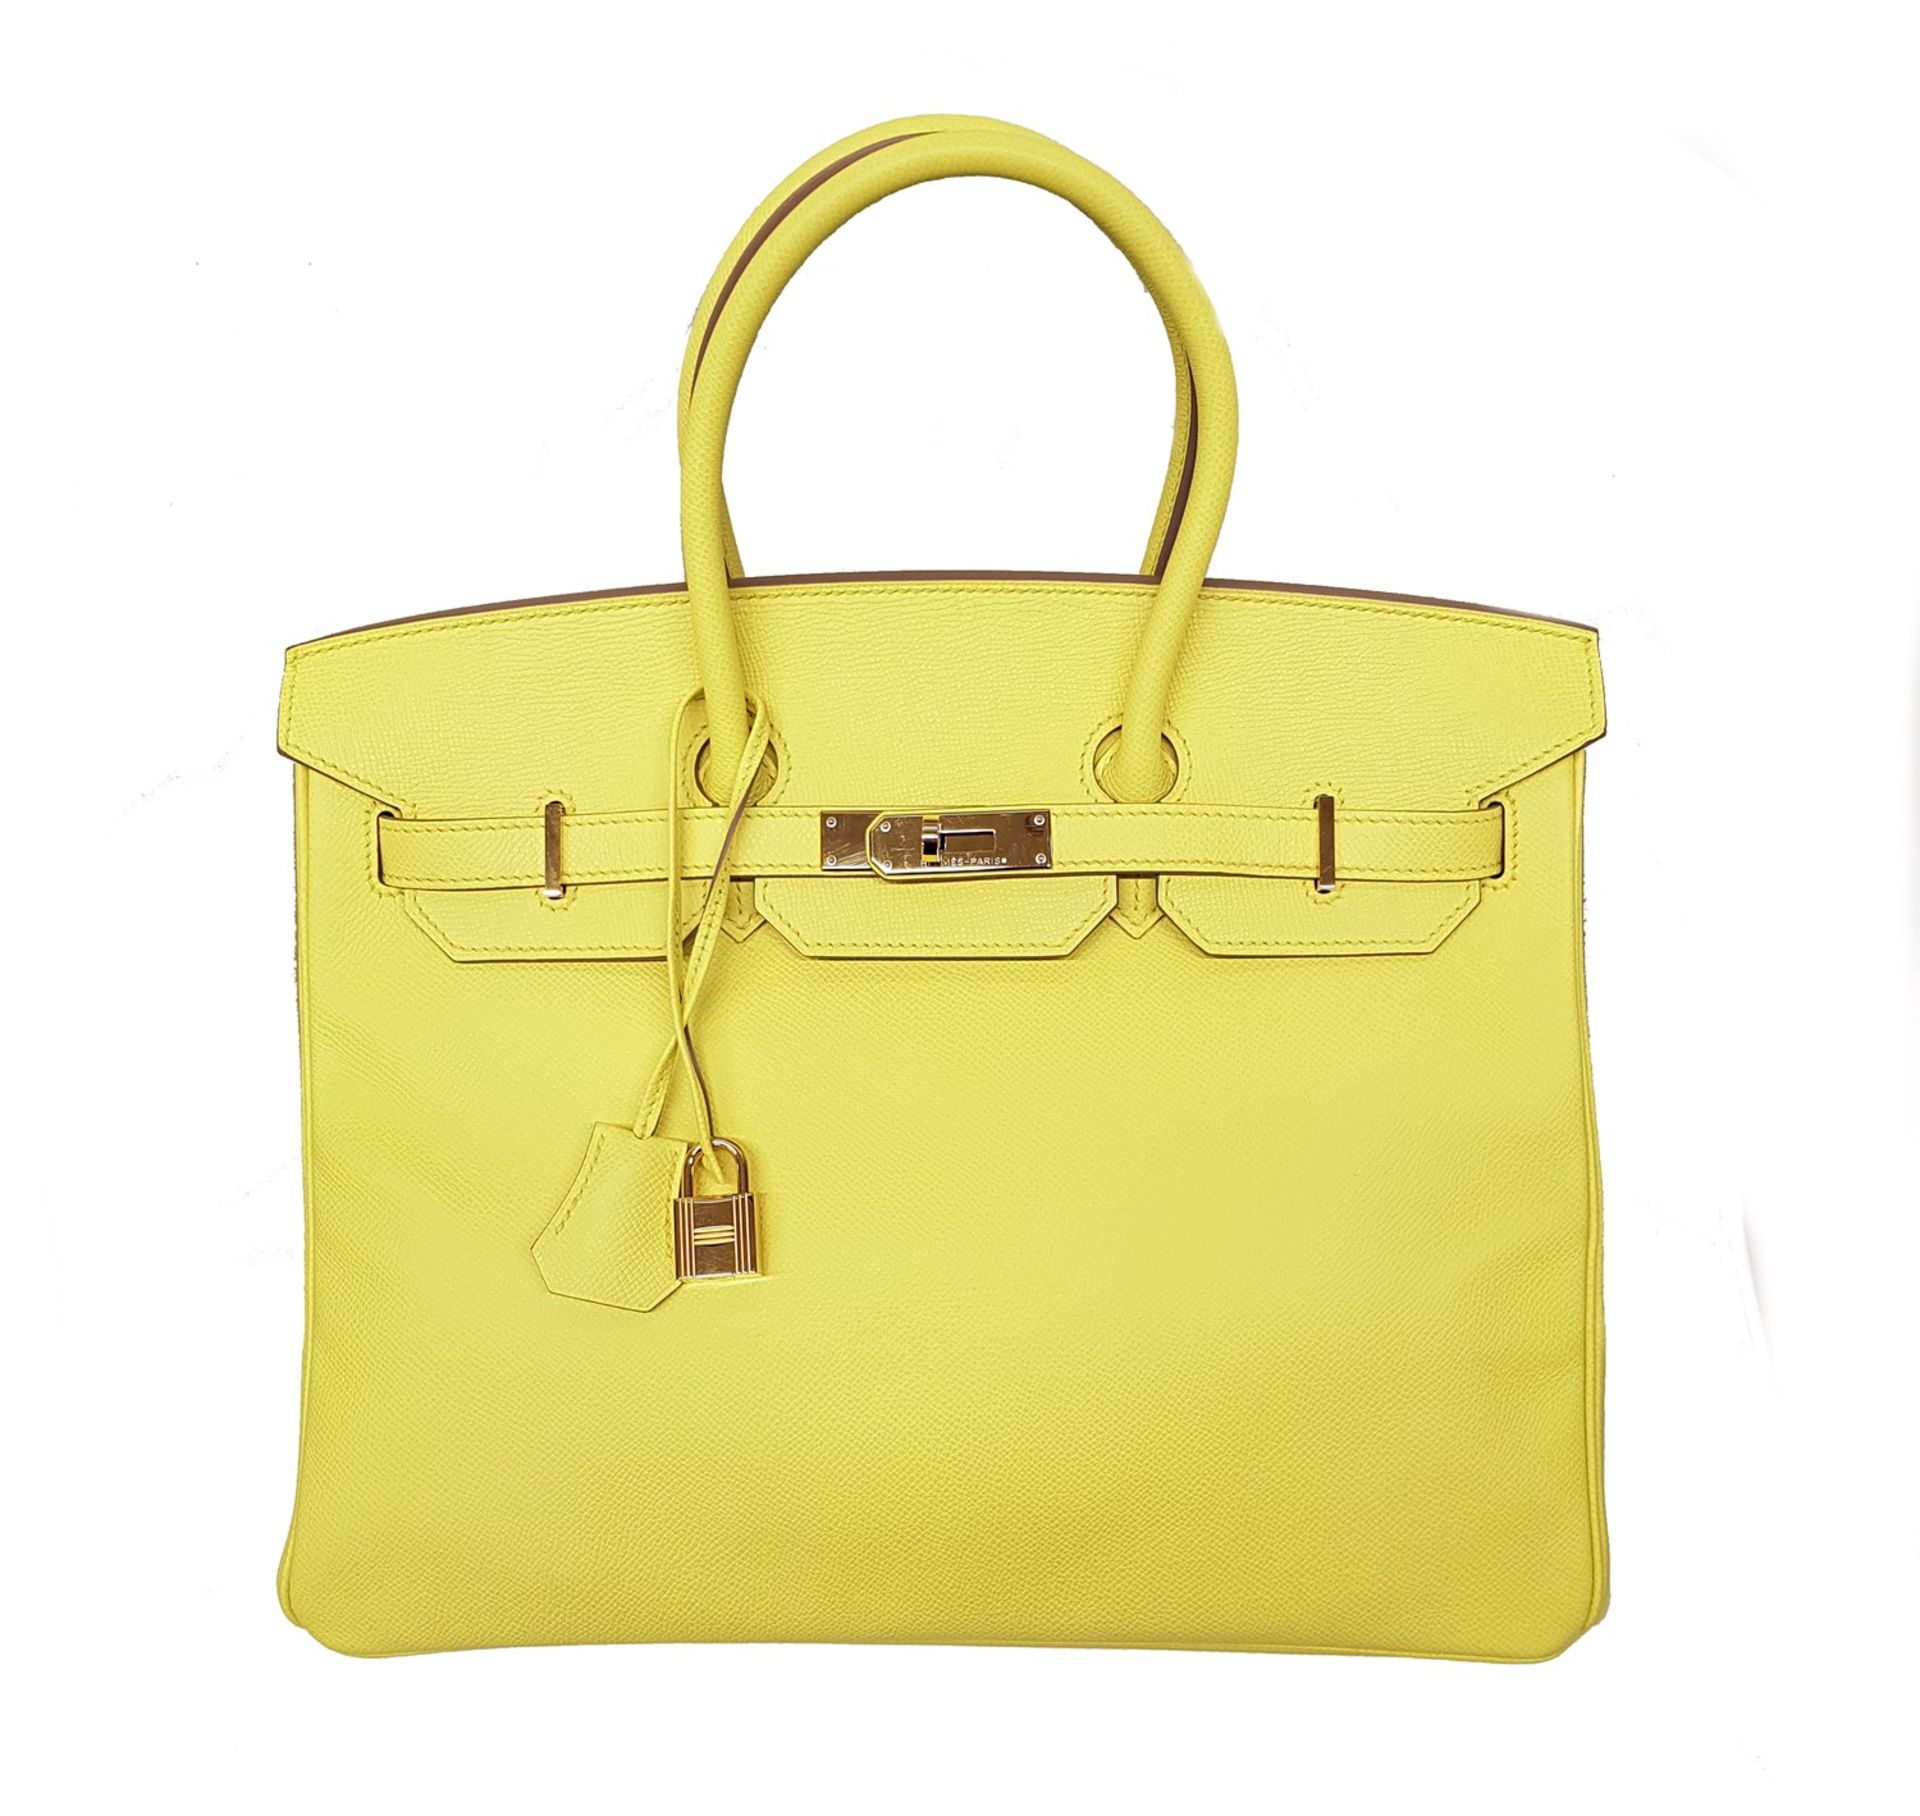 Hermès - Birkin bag 35 cm - Birkin bag 35 cm - Lime epsom leather 35 cm Birkin bag, [...]